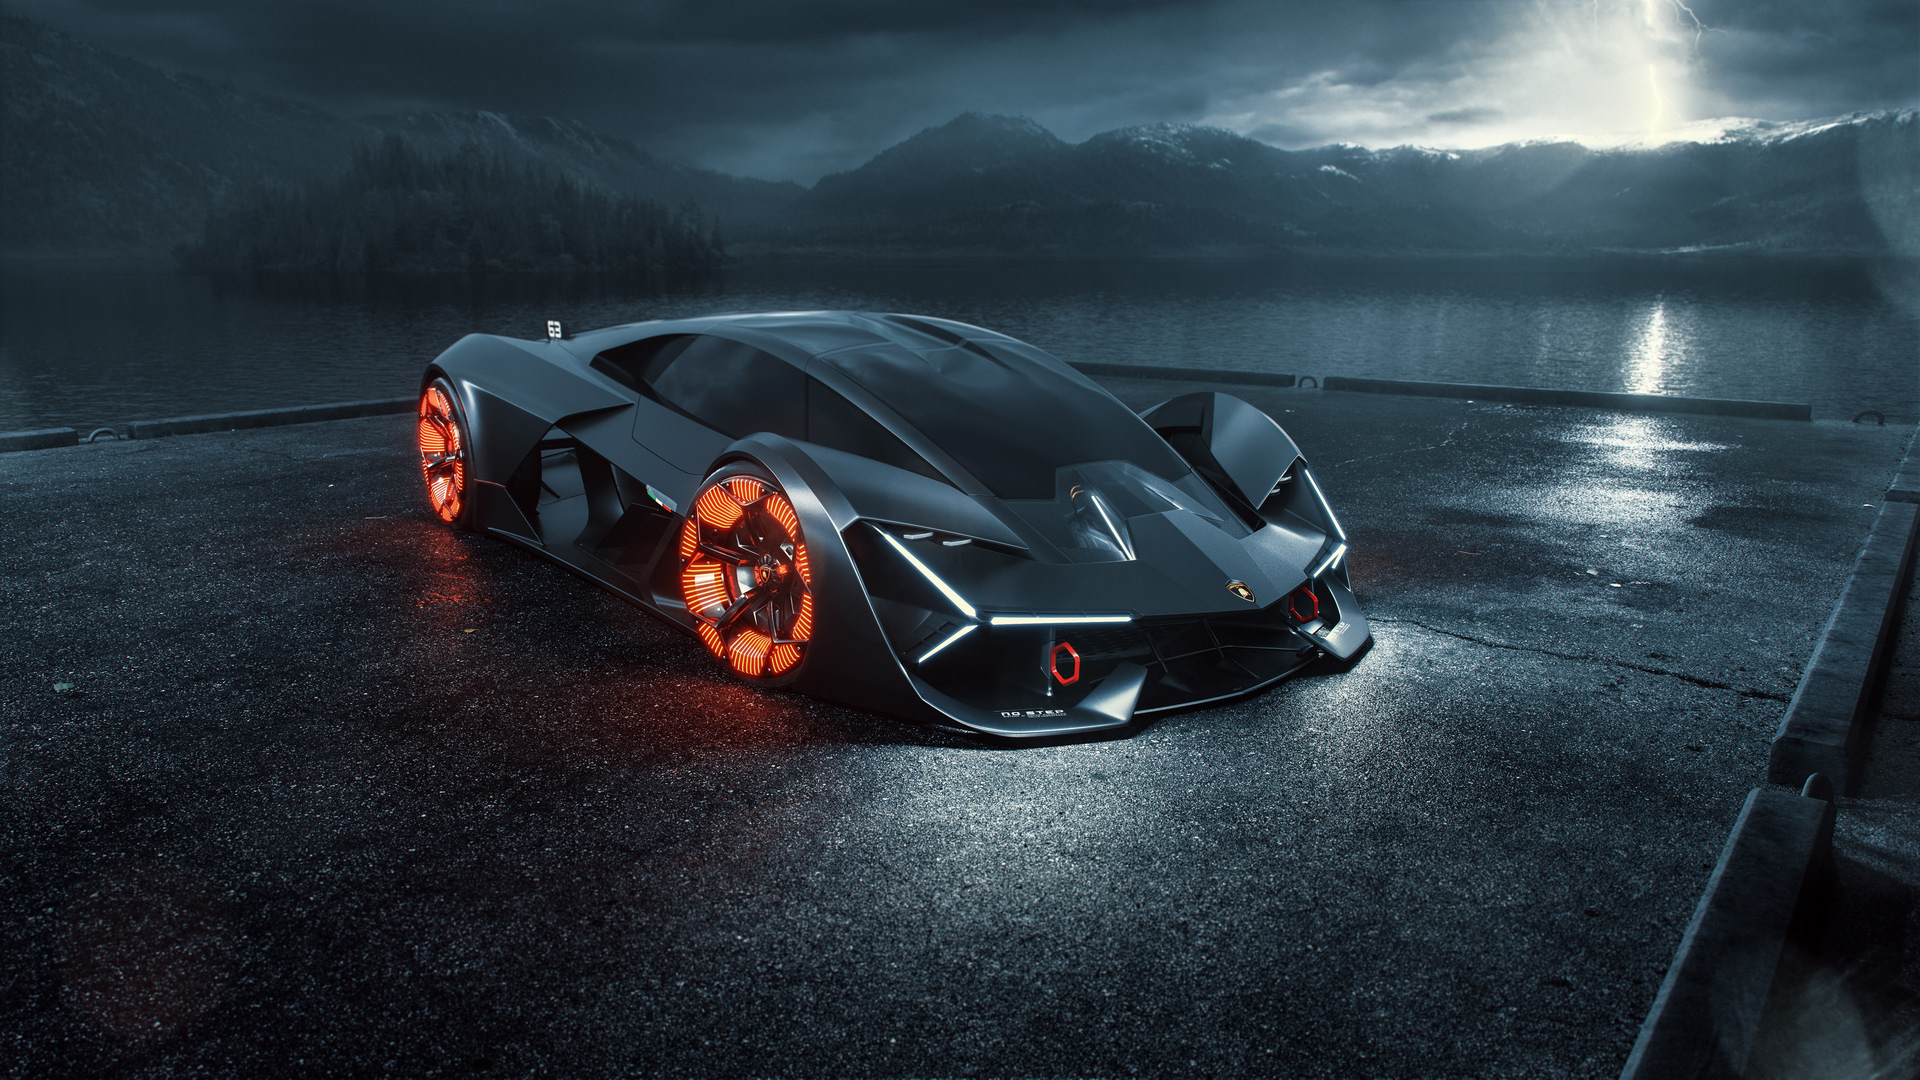 Lamborghini Terzo Millennio Digital Art, HD Cars, 4k